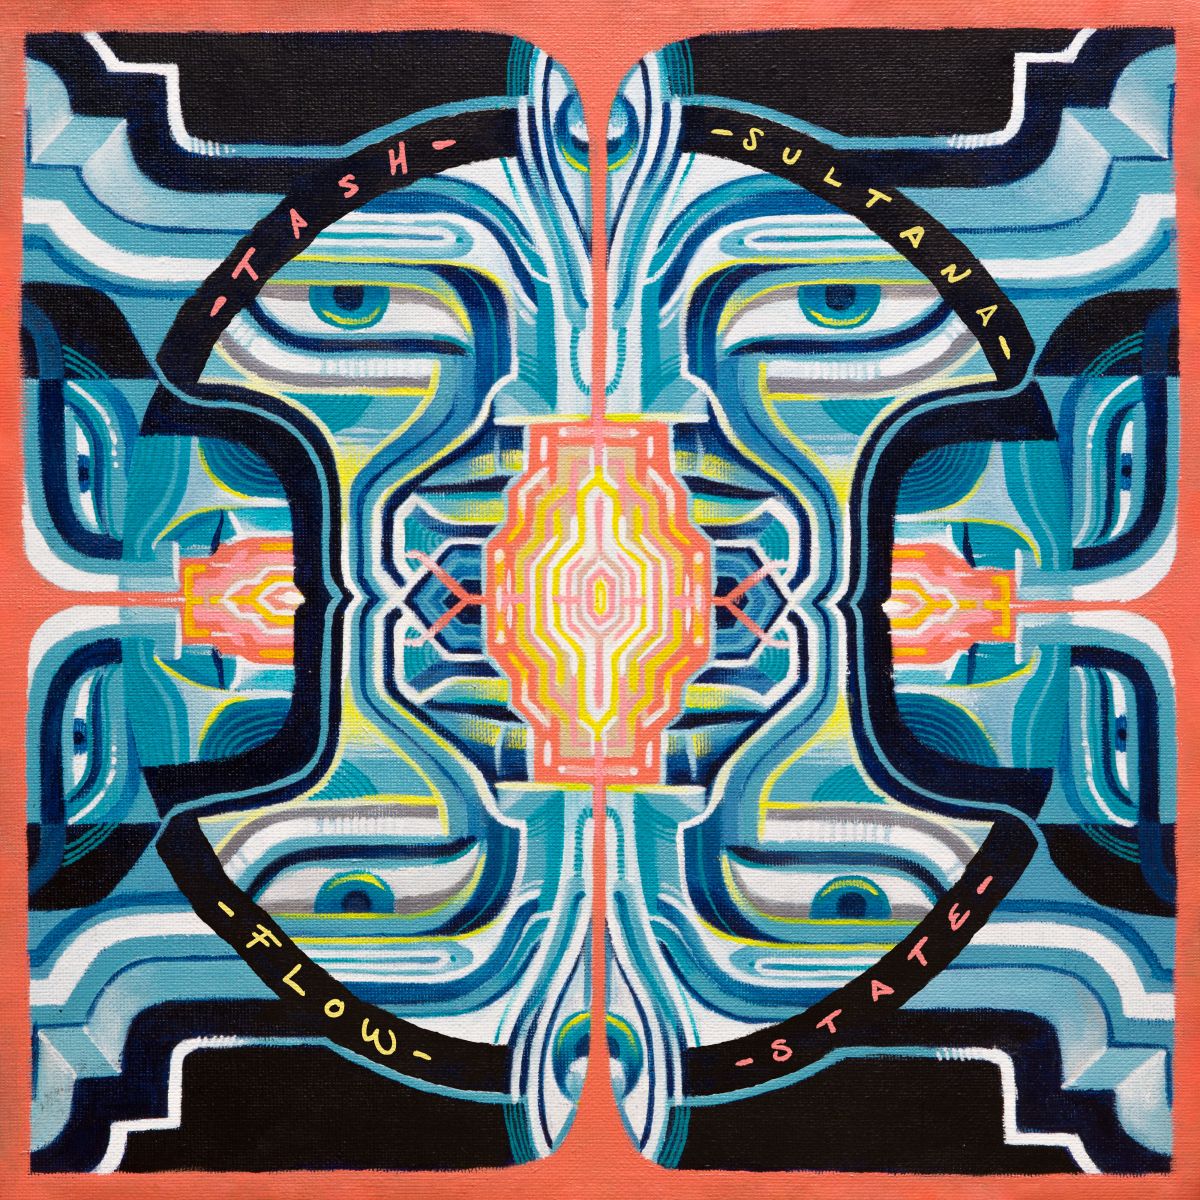 tash-sultana-flow-state-album-artwork-cover